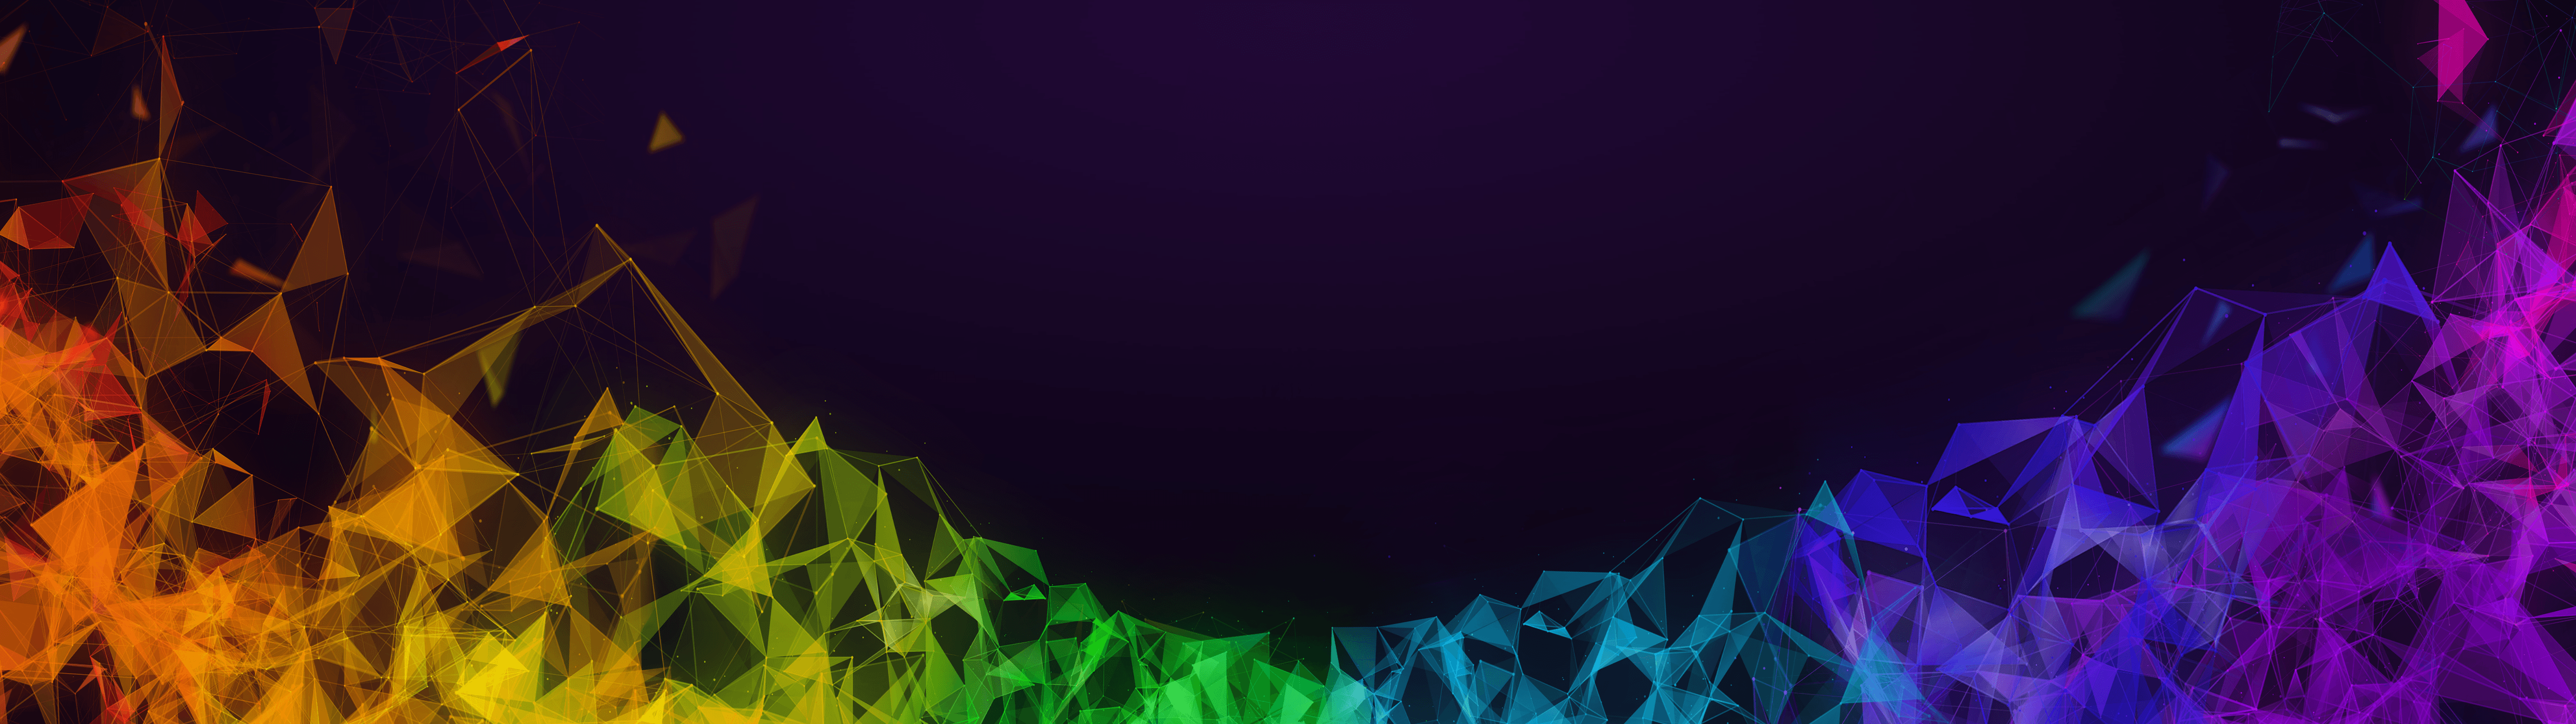 Requested edit for Razer prism wallpaper, no logo